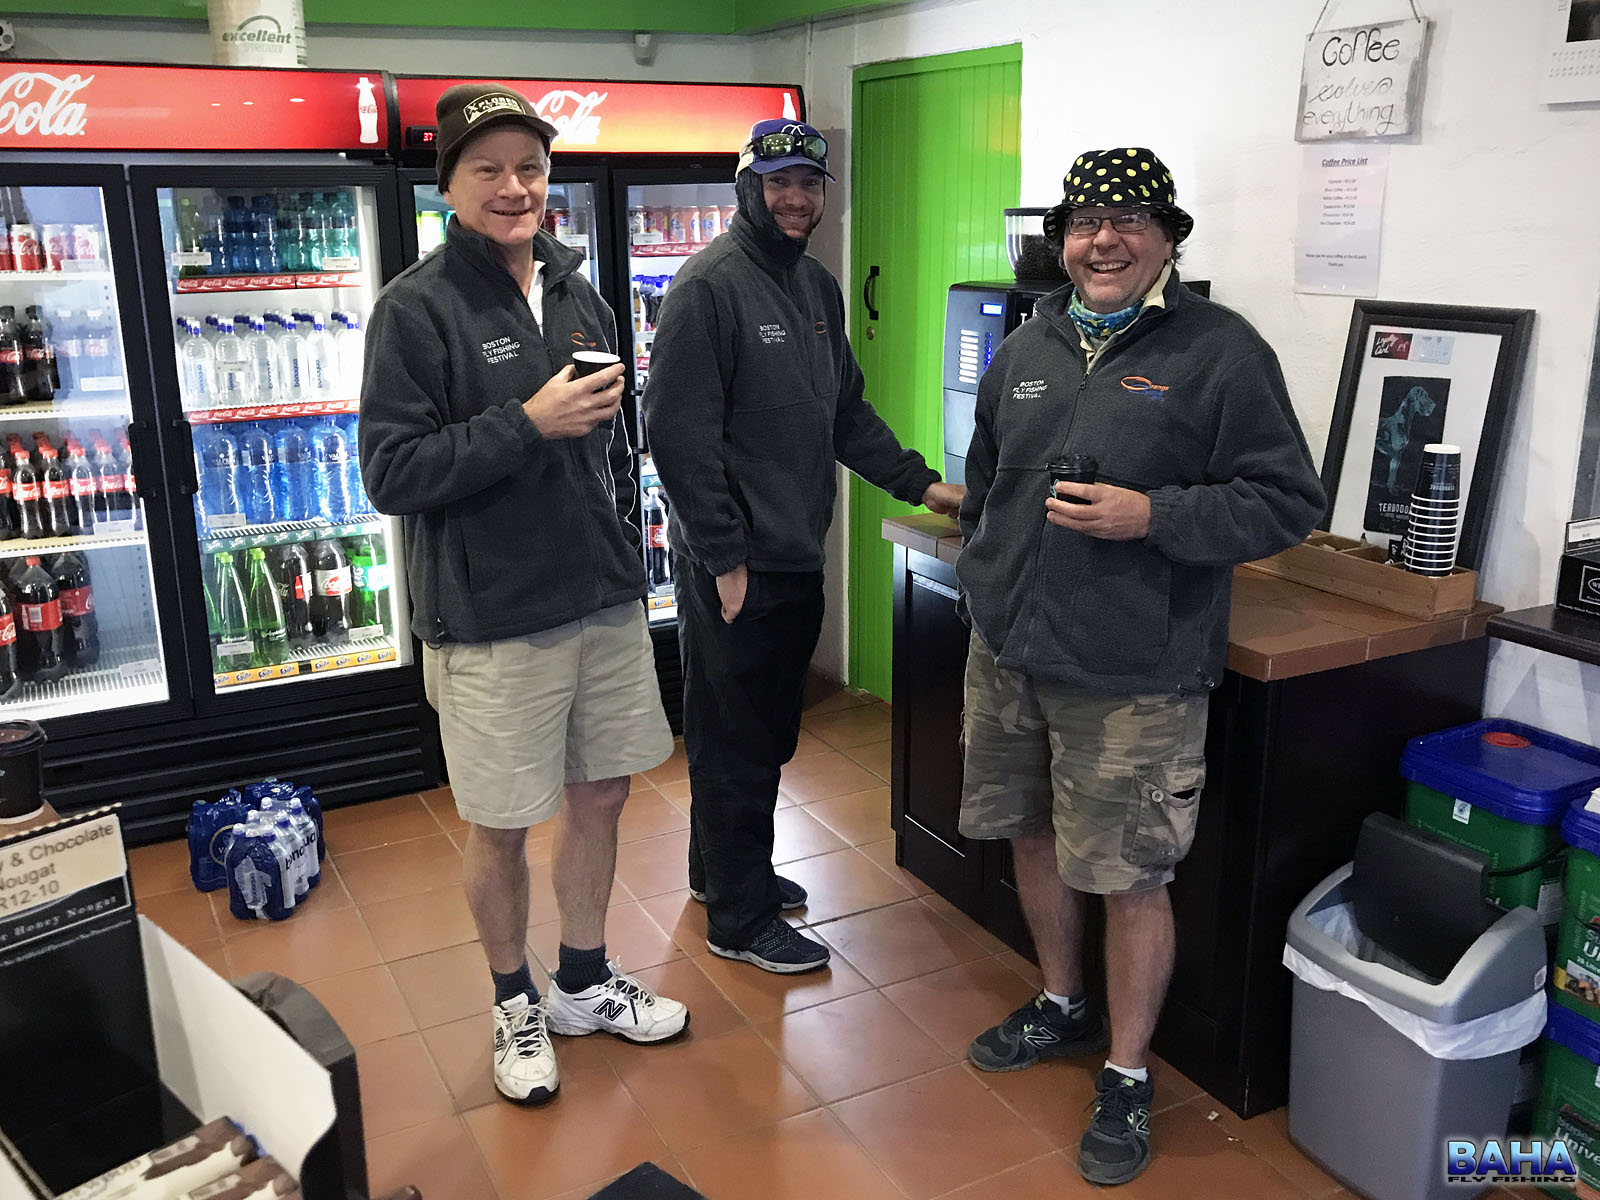 Bruce, Keegan and Neill having coffee at the Boston Garage